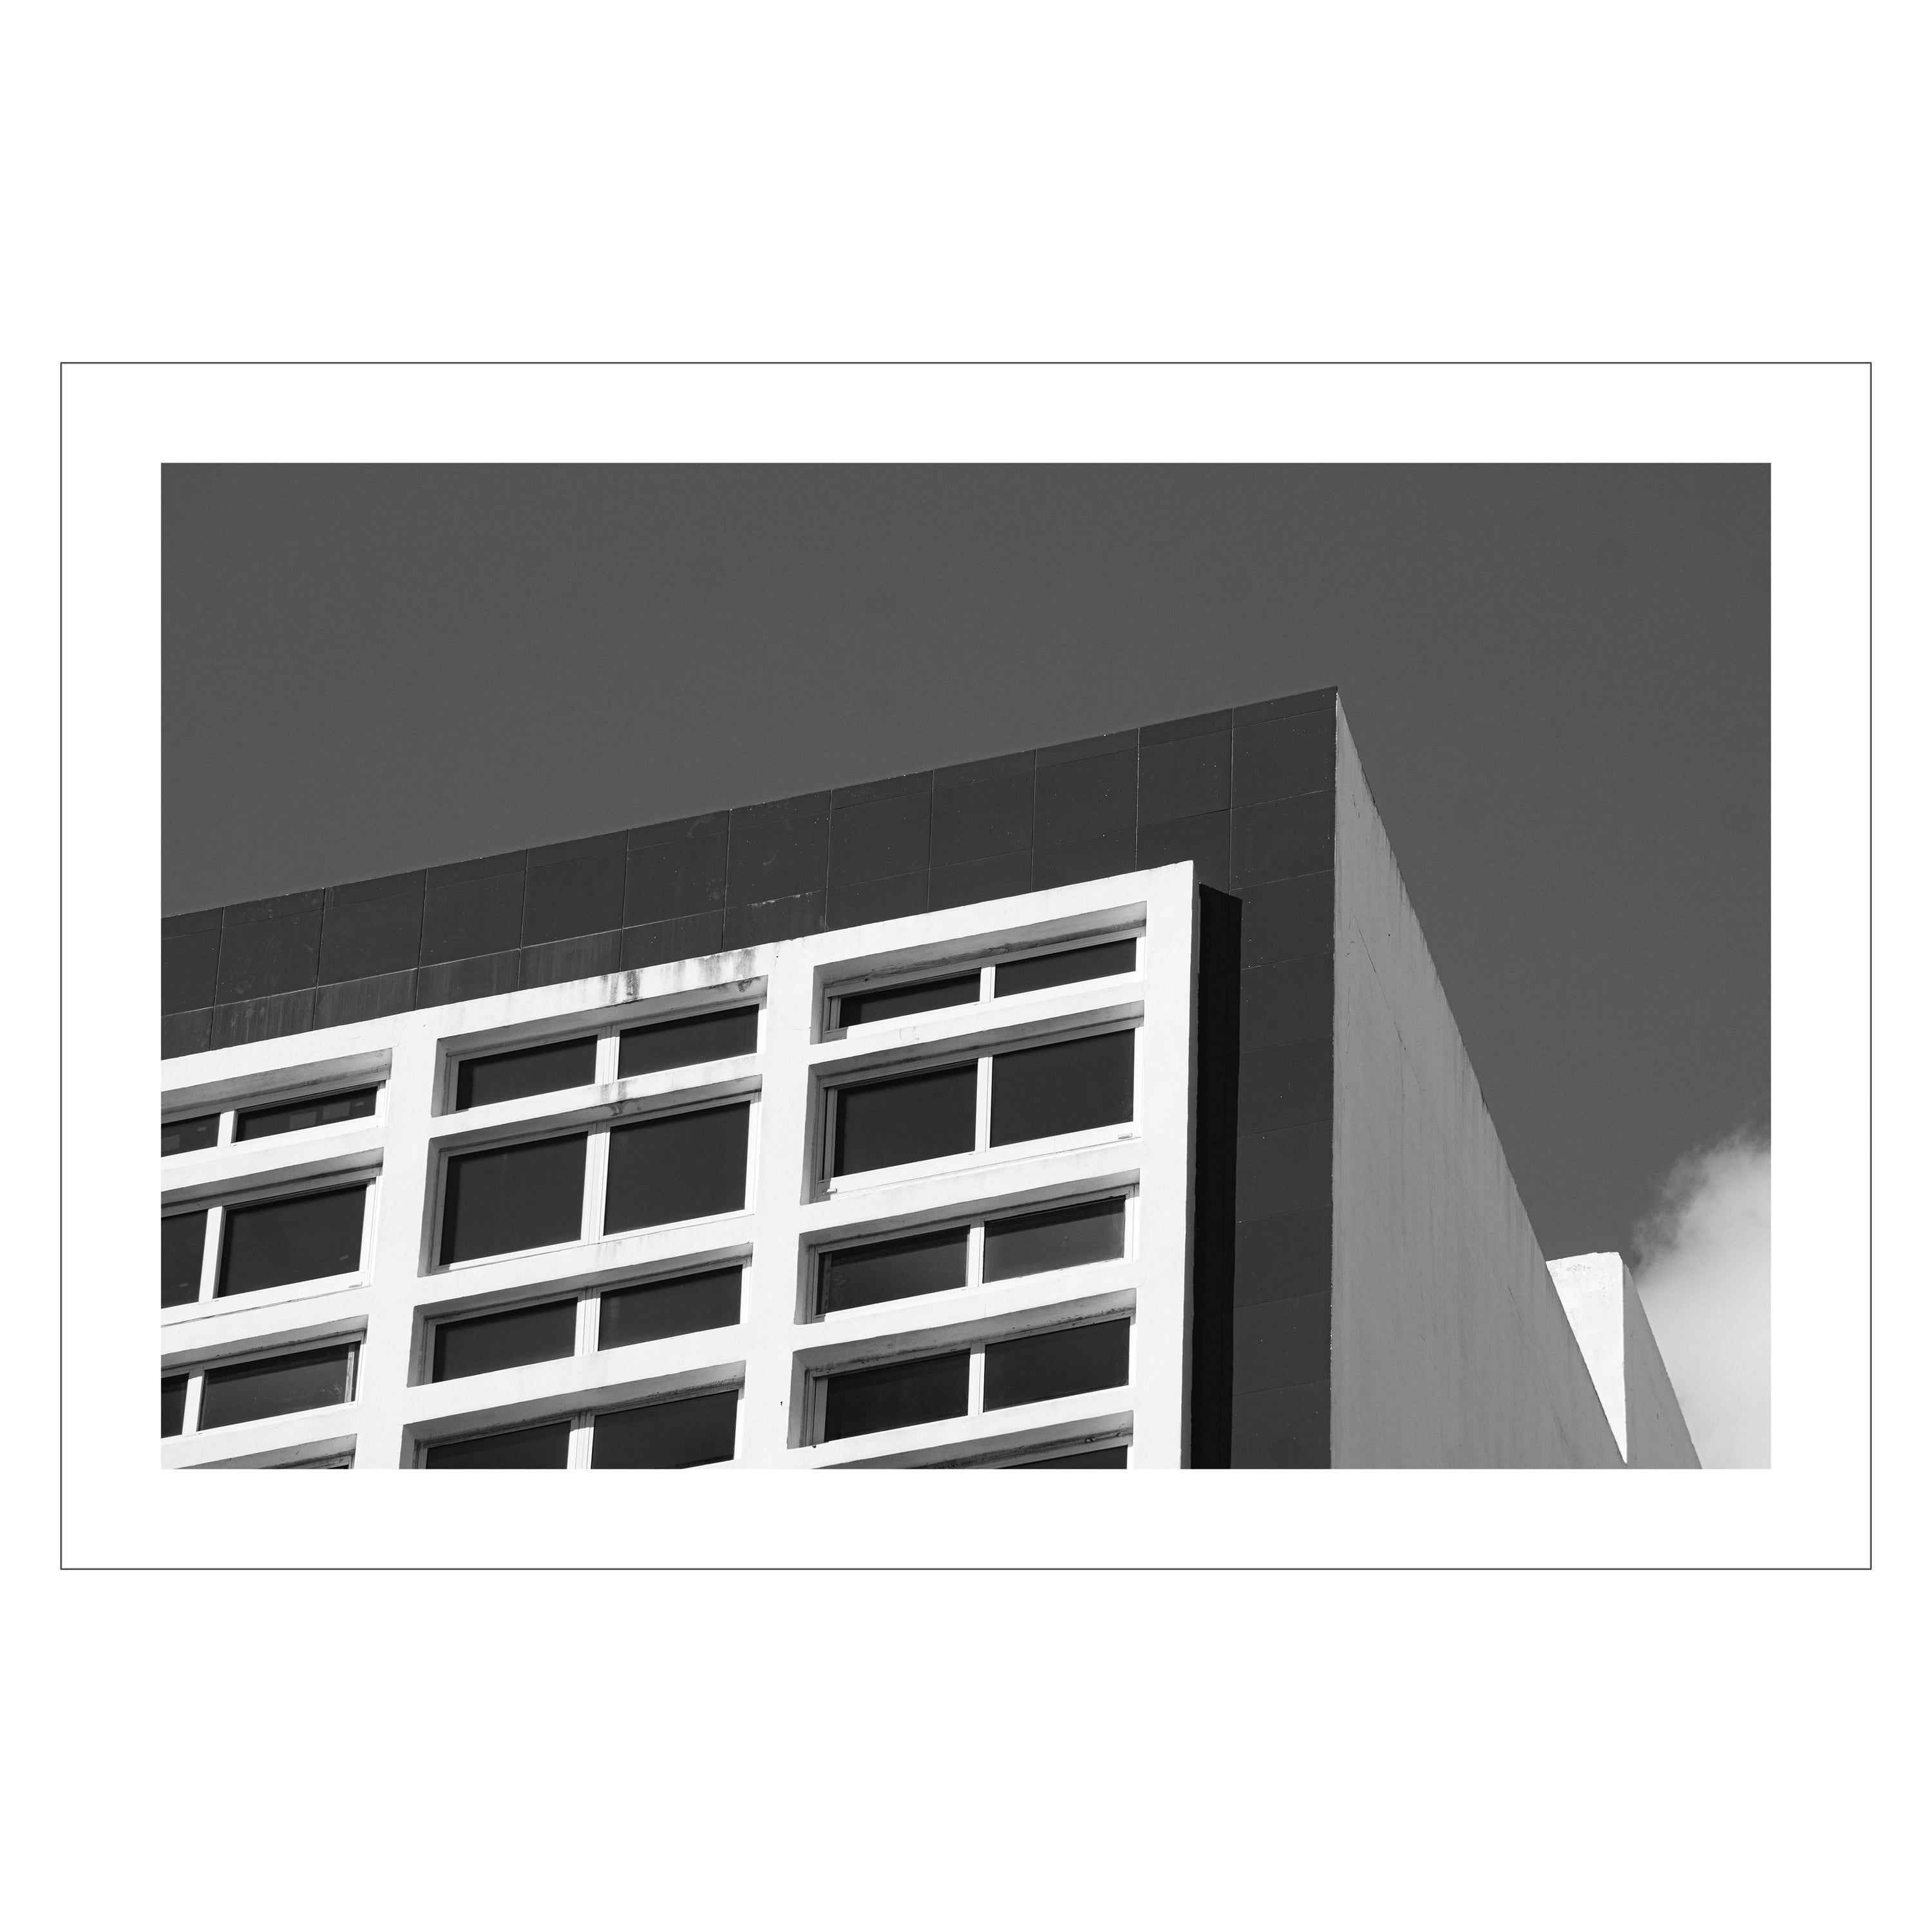 Kind of Cyan Landscape Photograph - Minimalist Geometric Building, Black and White Bauhaus Architecture, Tropical